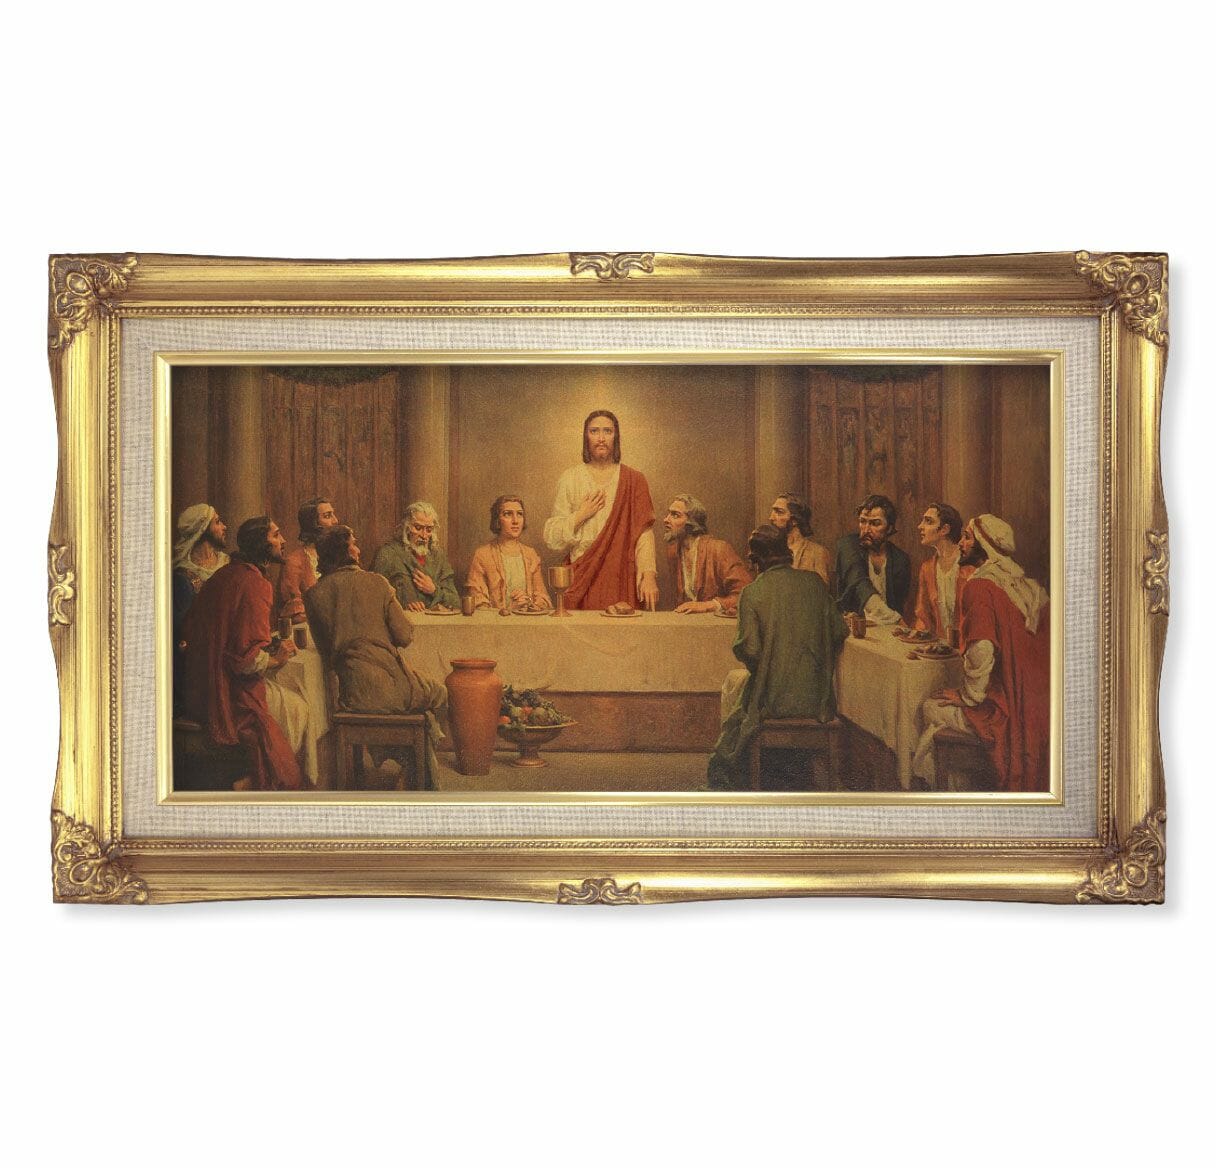 Last Supper Gold-Leaf Framed Art - Buy Religious Catholic Store